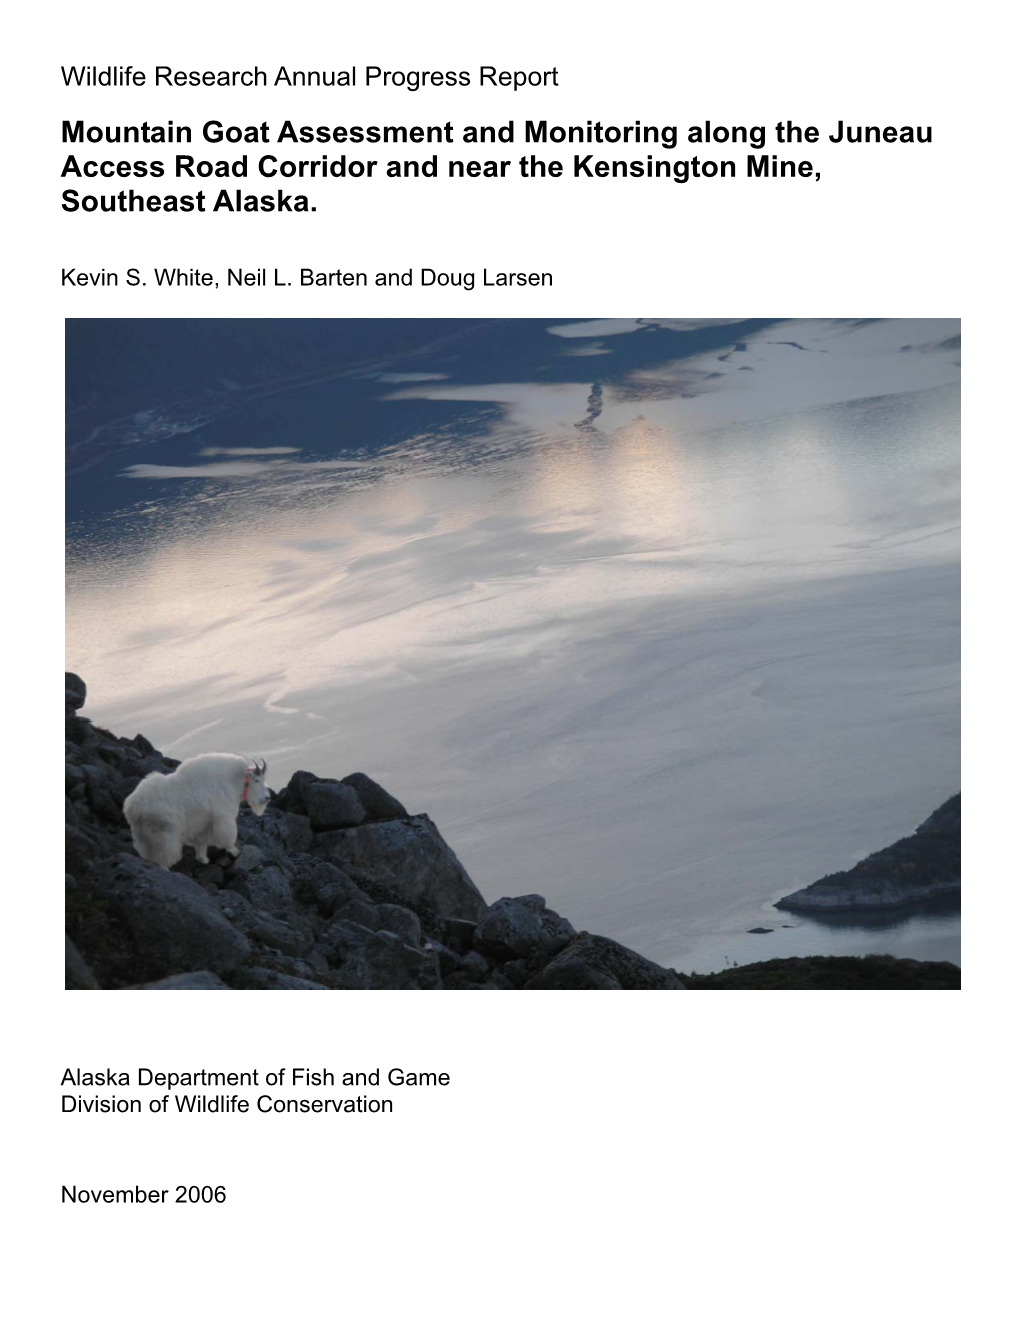 Mountain Goat Assessment and Monitoring Along the Juneau Access Road Corridor and Near the Kensington Mine, Southeast Alaska